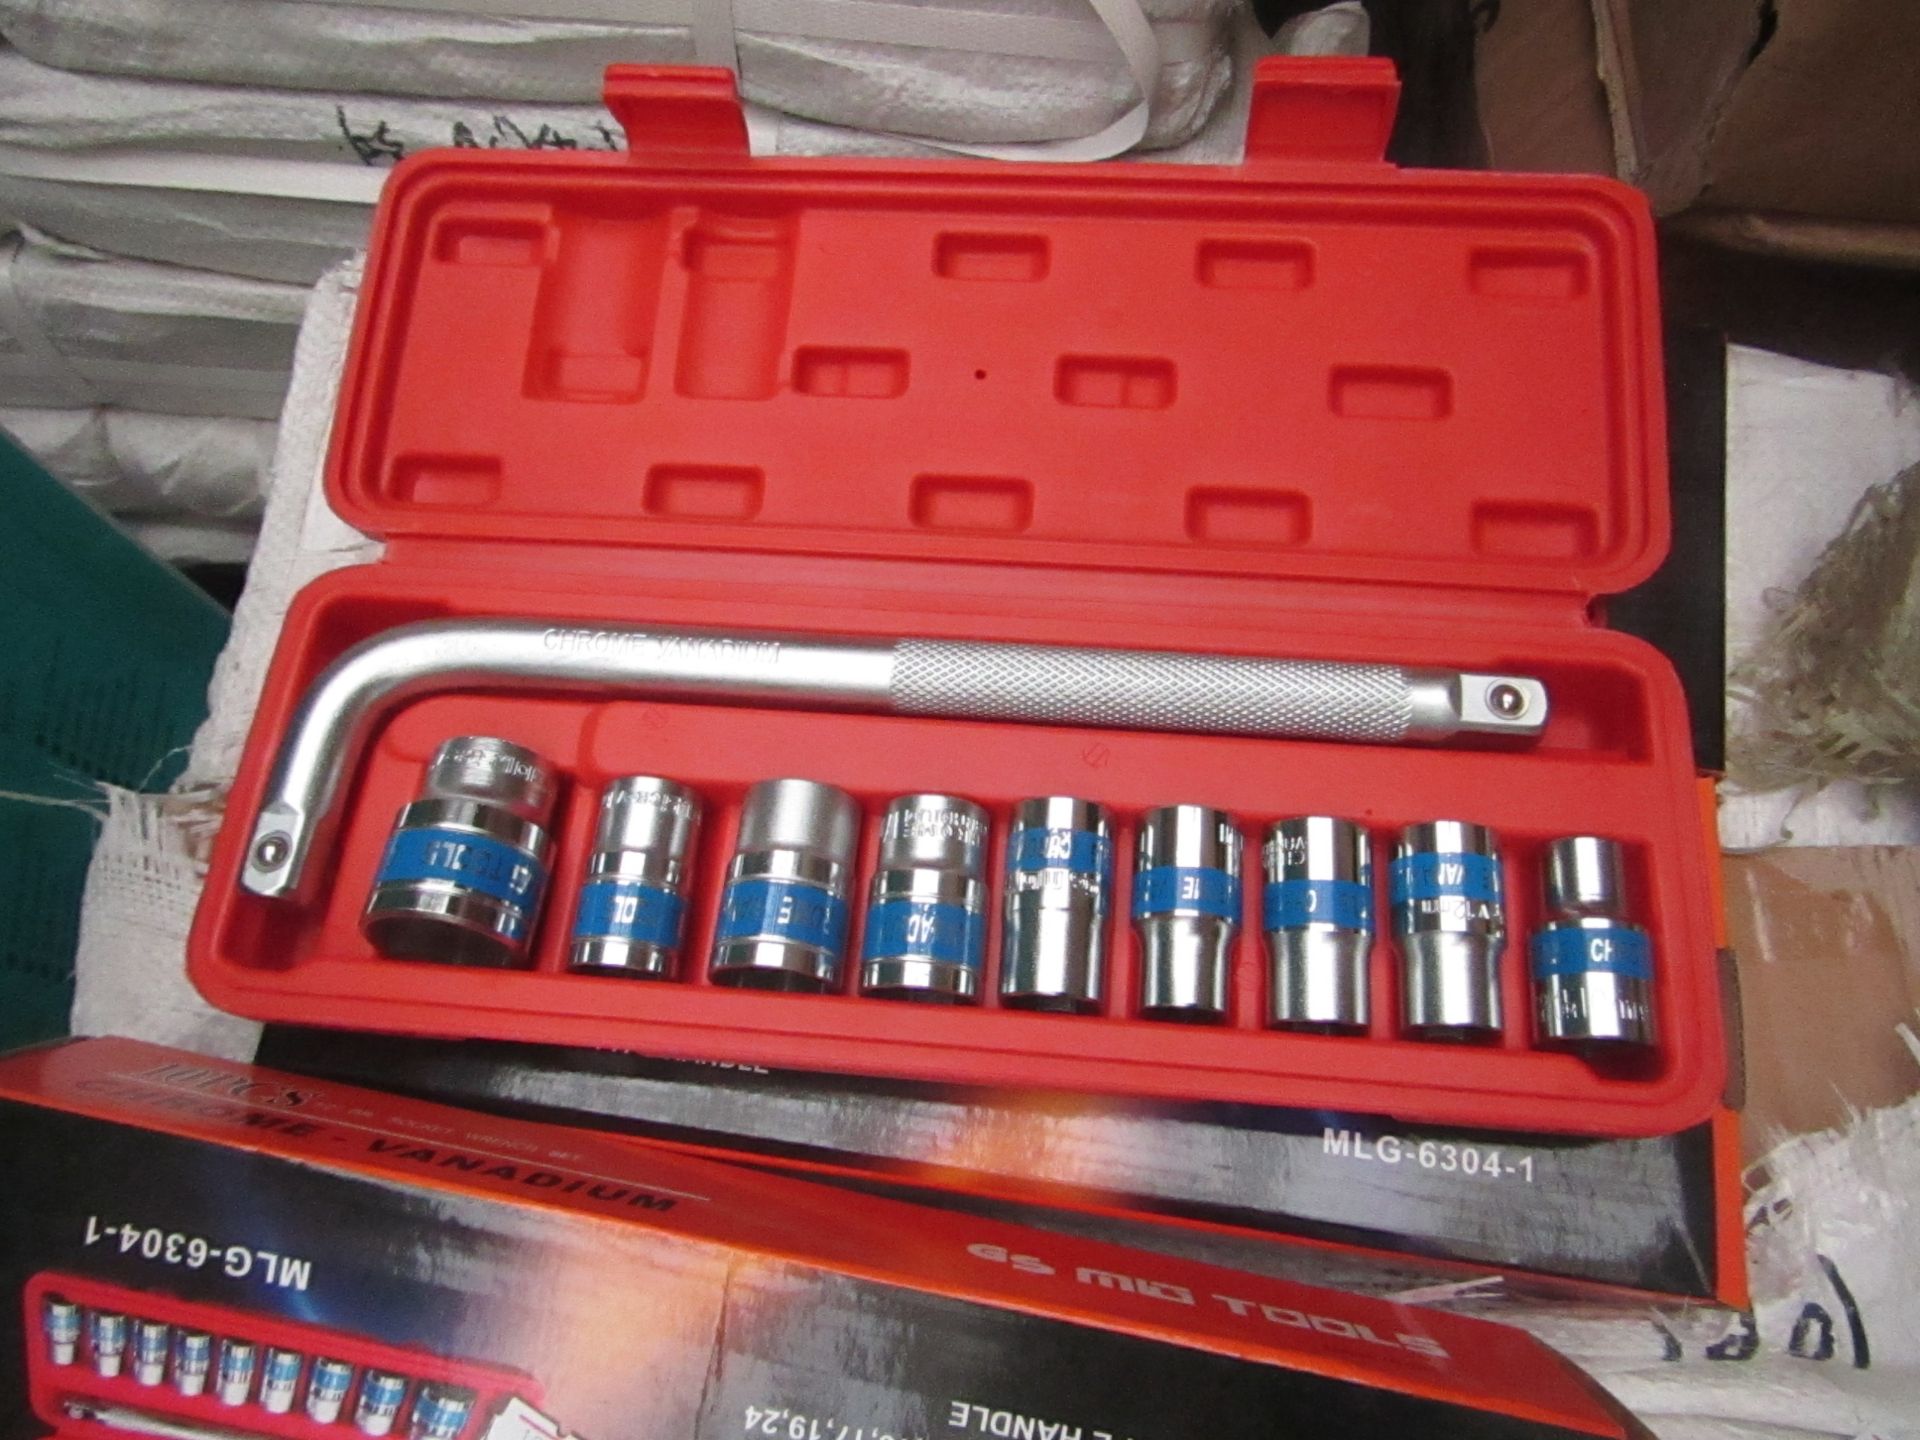 GS MG tools 10pcs 1/2" DR socket wrench set , new and boxed.